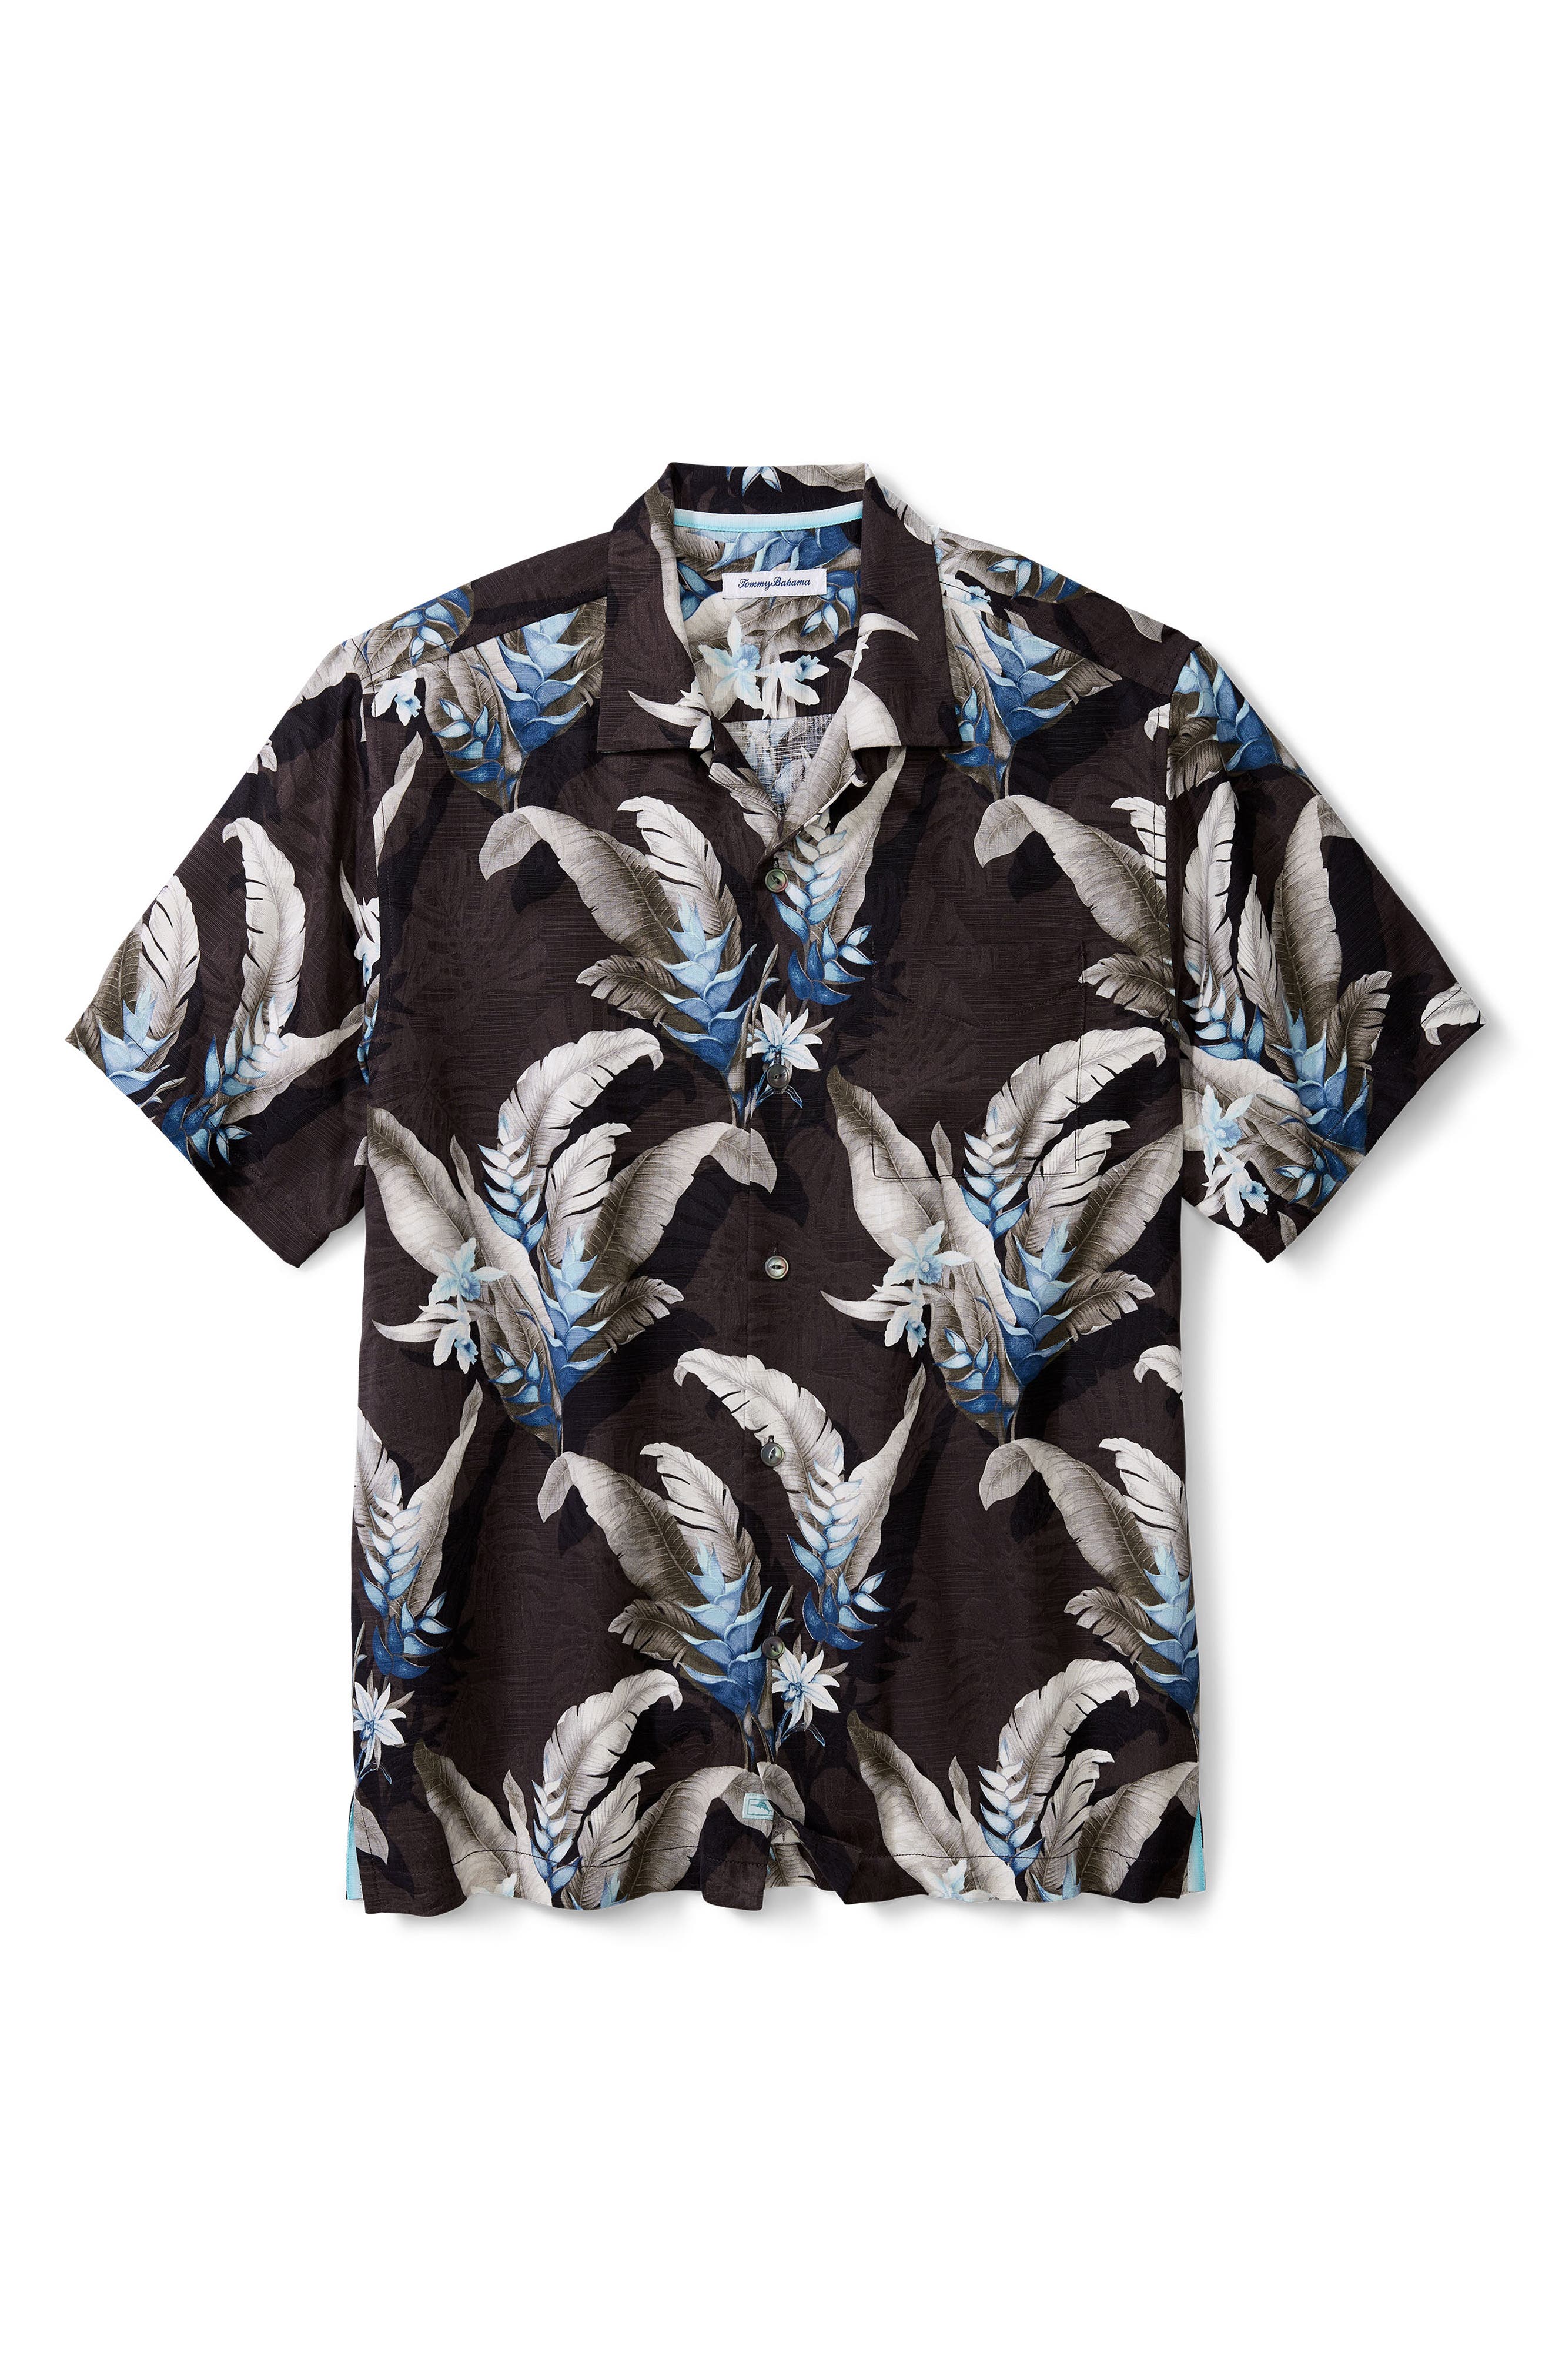 tommy bahama hawaiian shirts clearance